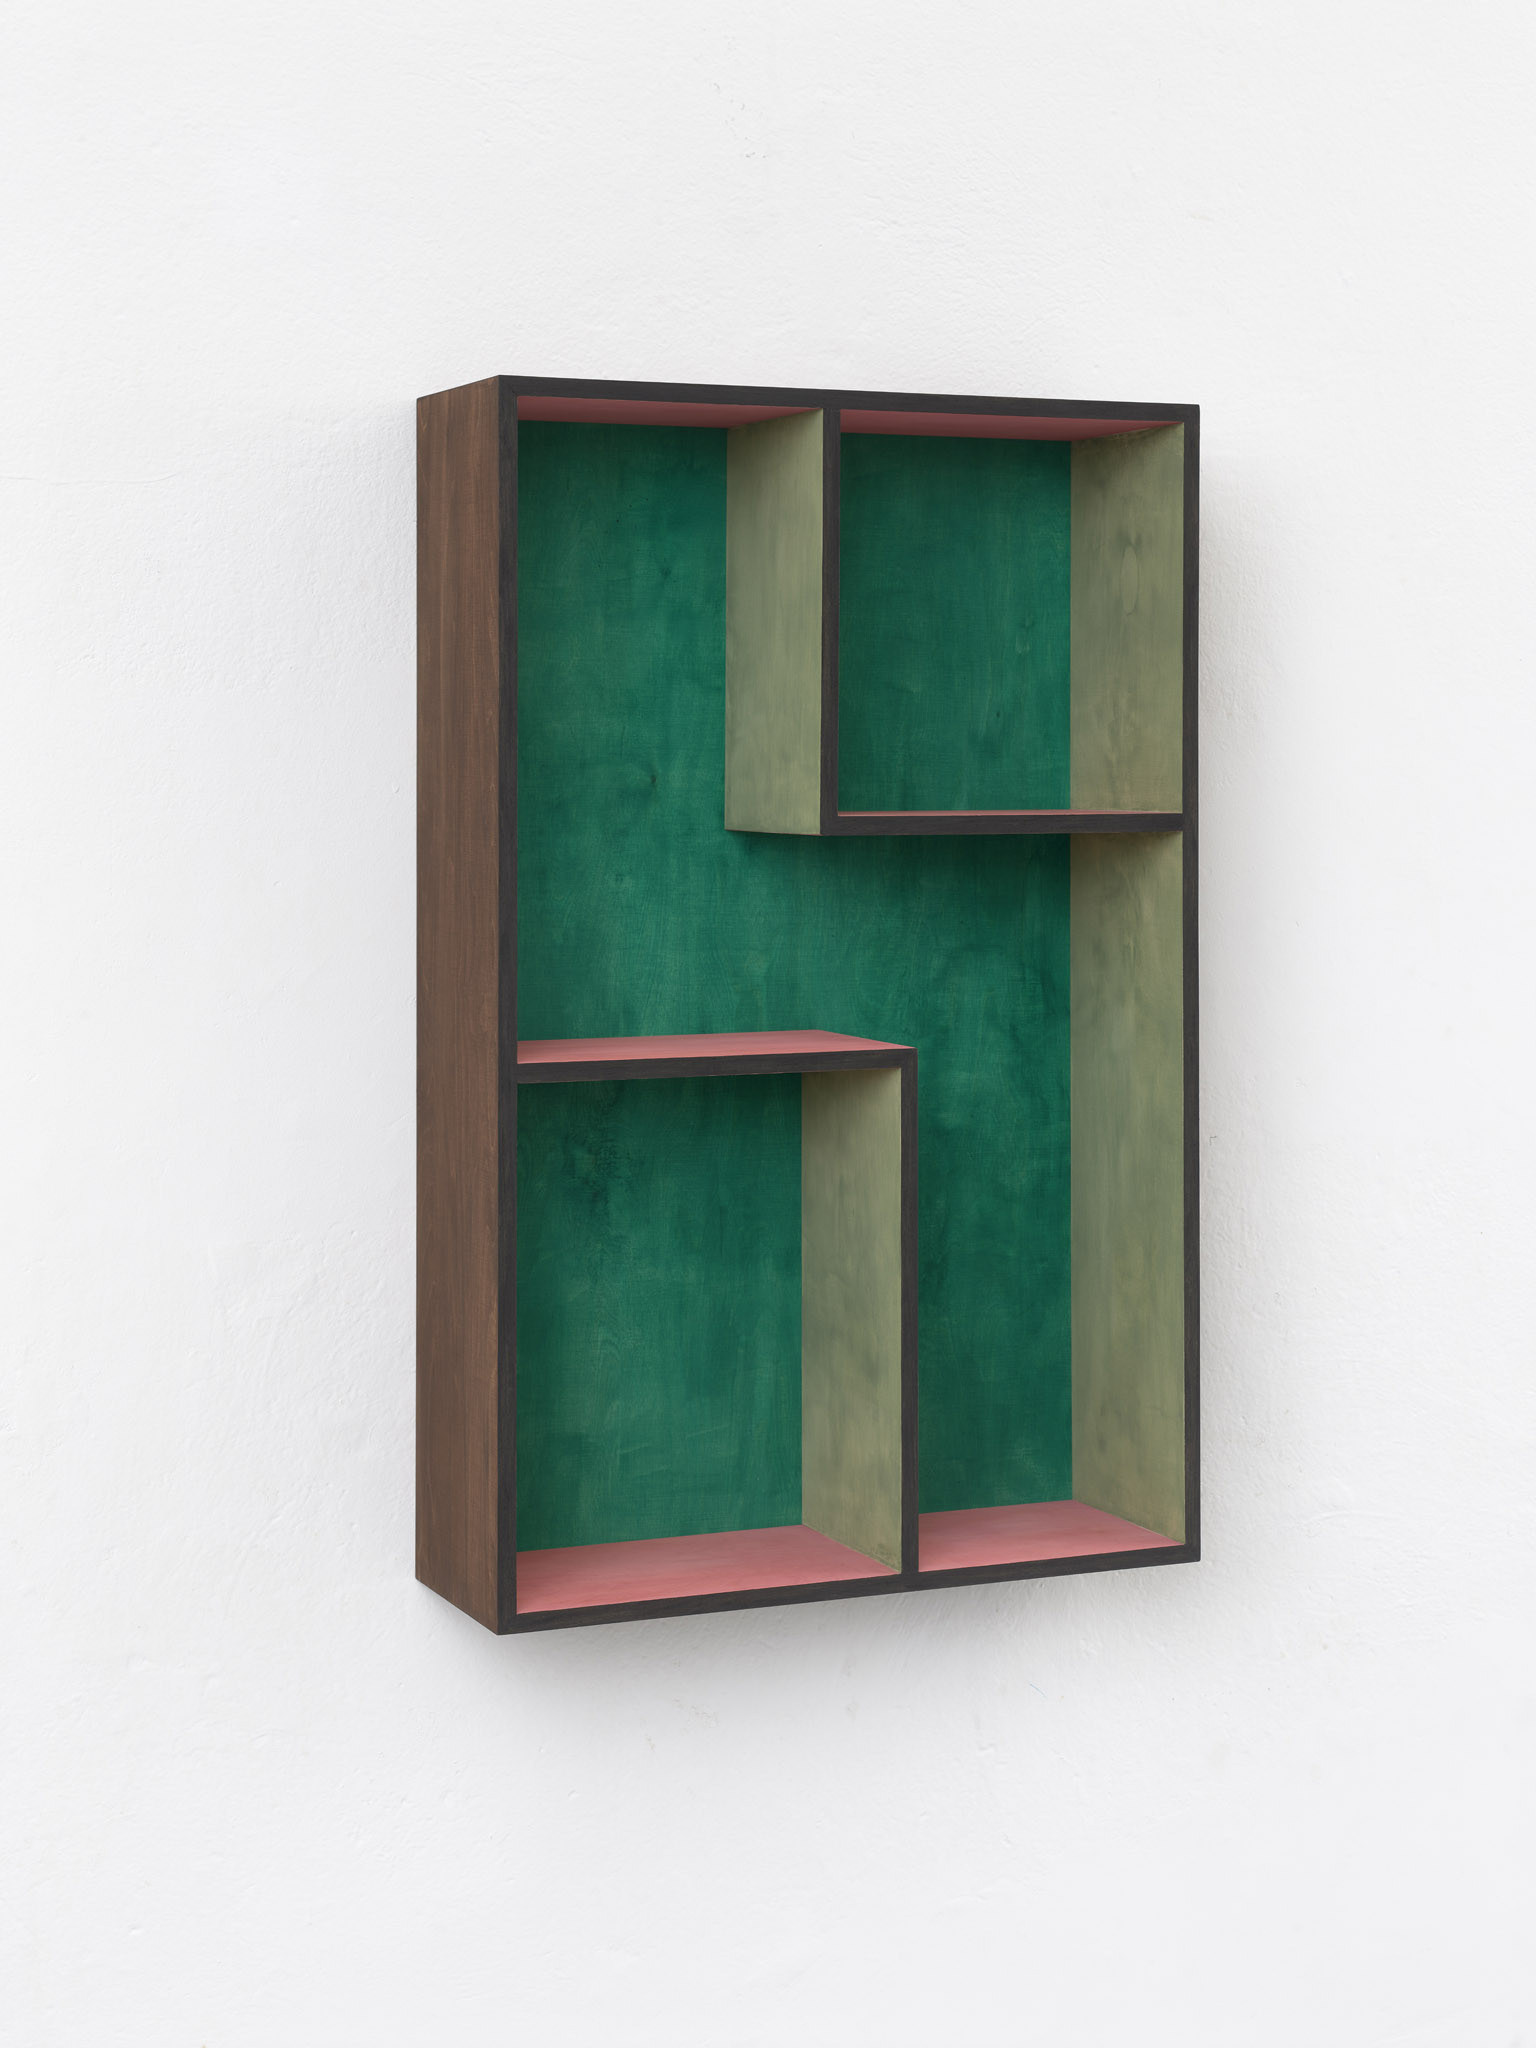 Sunah Choi, "Shelf Geneva", 2023, wood color, 60 x 94 x 20 cm